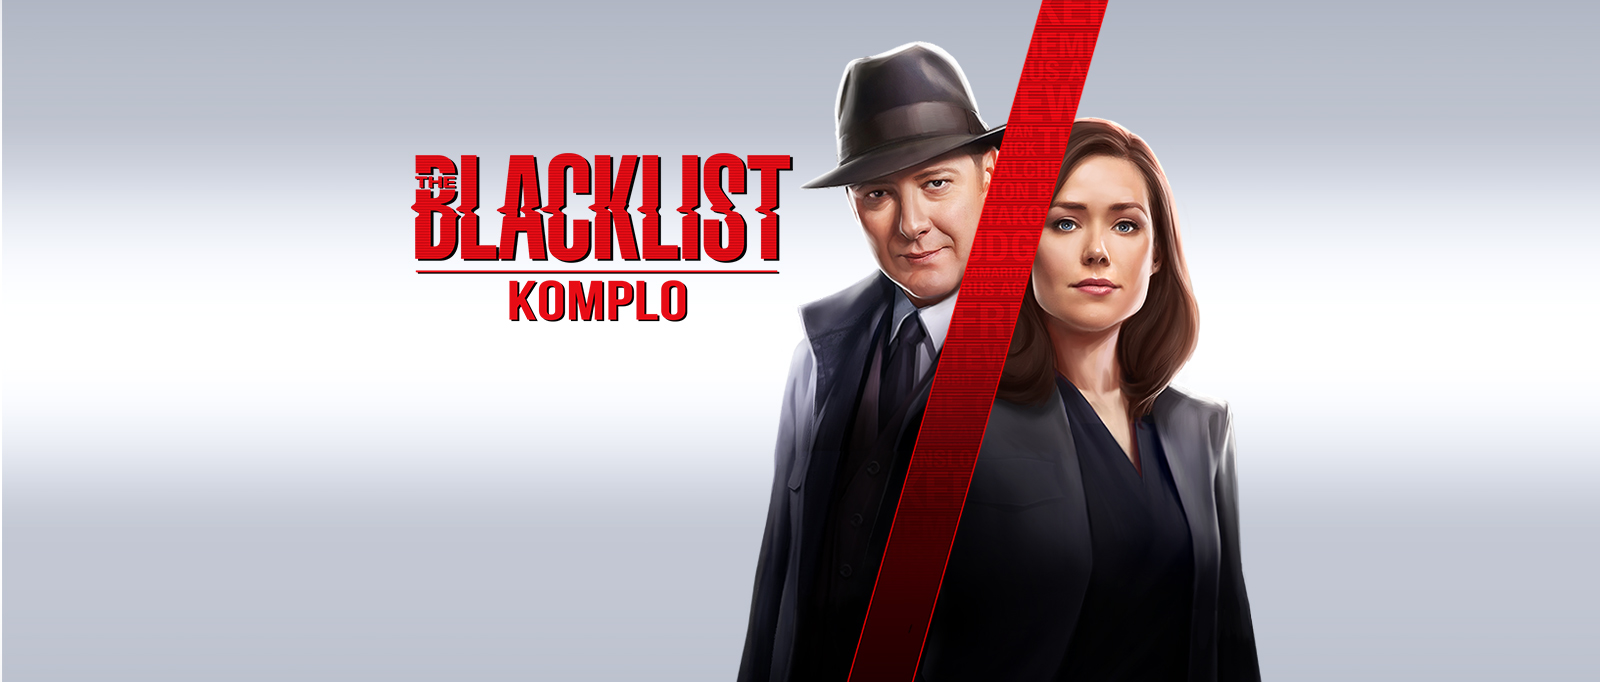 The Blacklist: Komplo